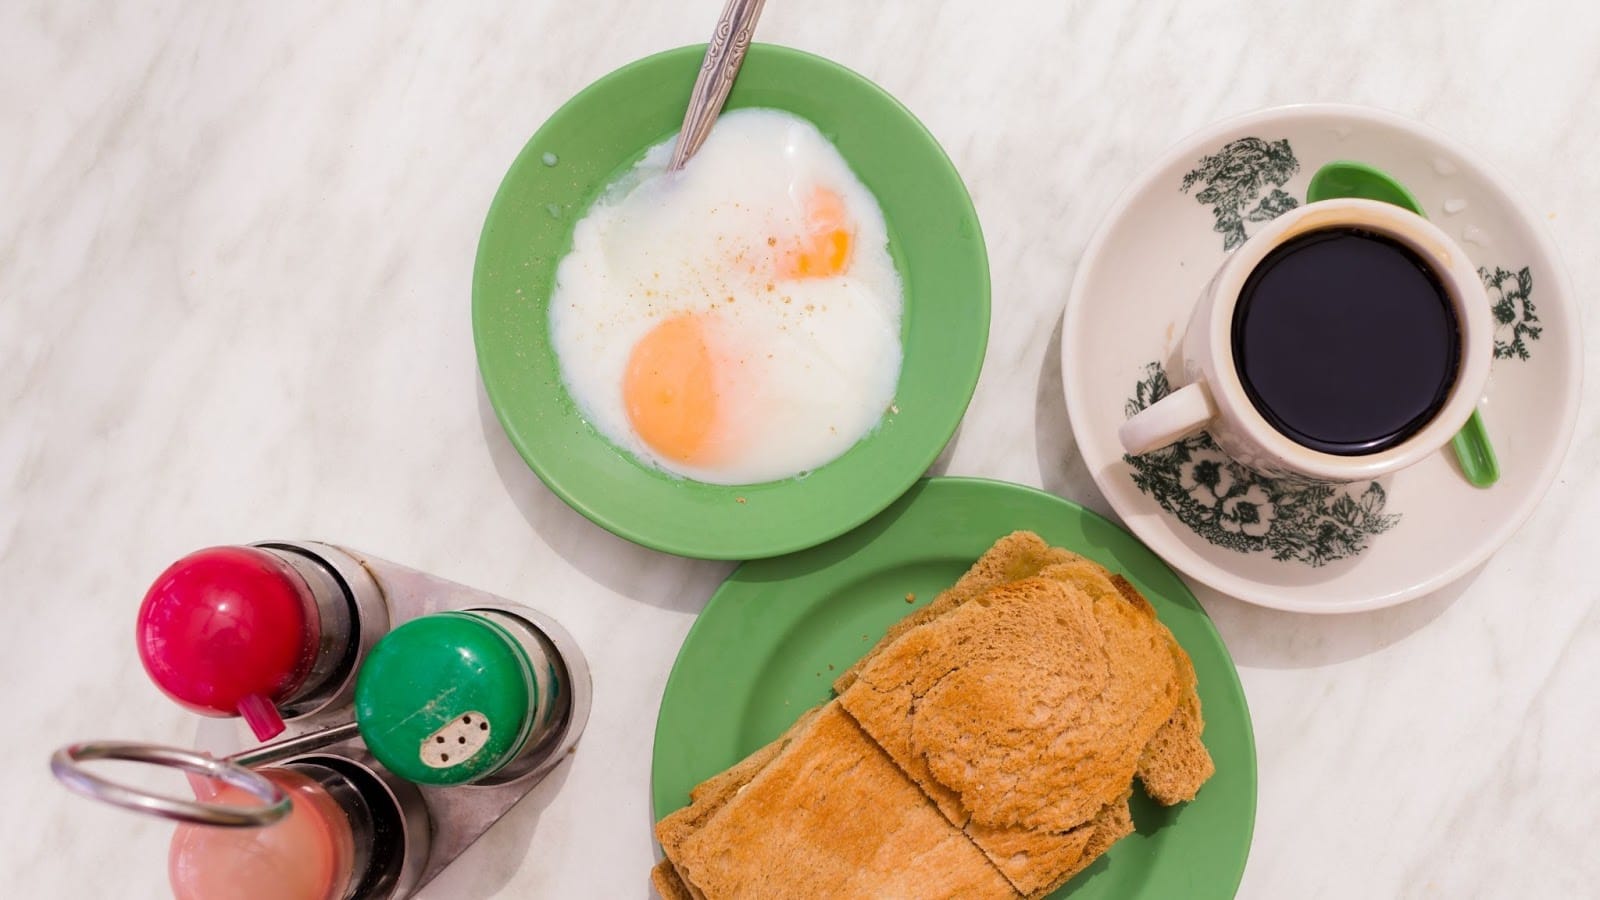 Traditional Singaporean breakfast of kopi, kaya toast and 2 runny eggs